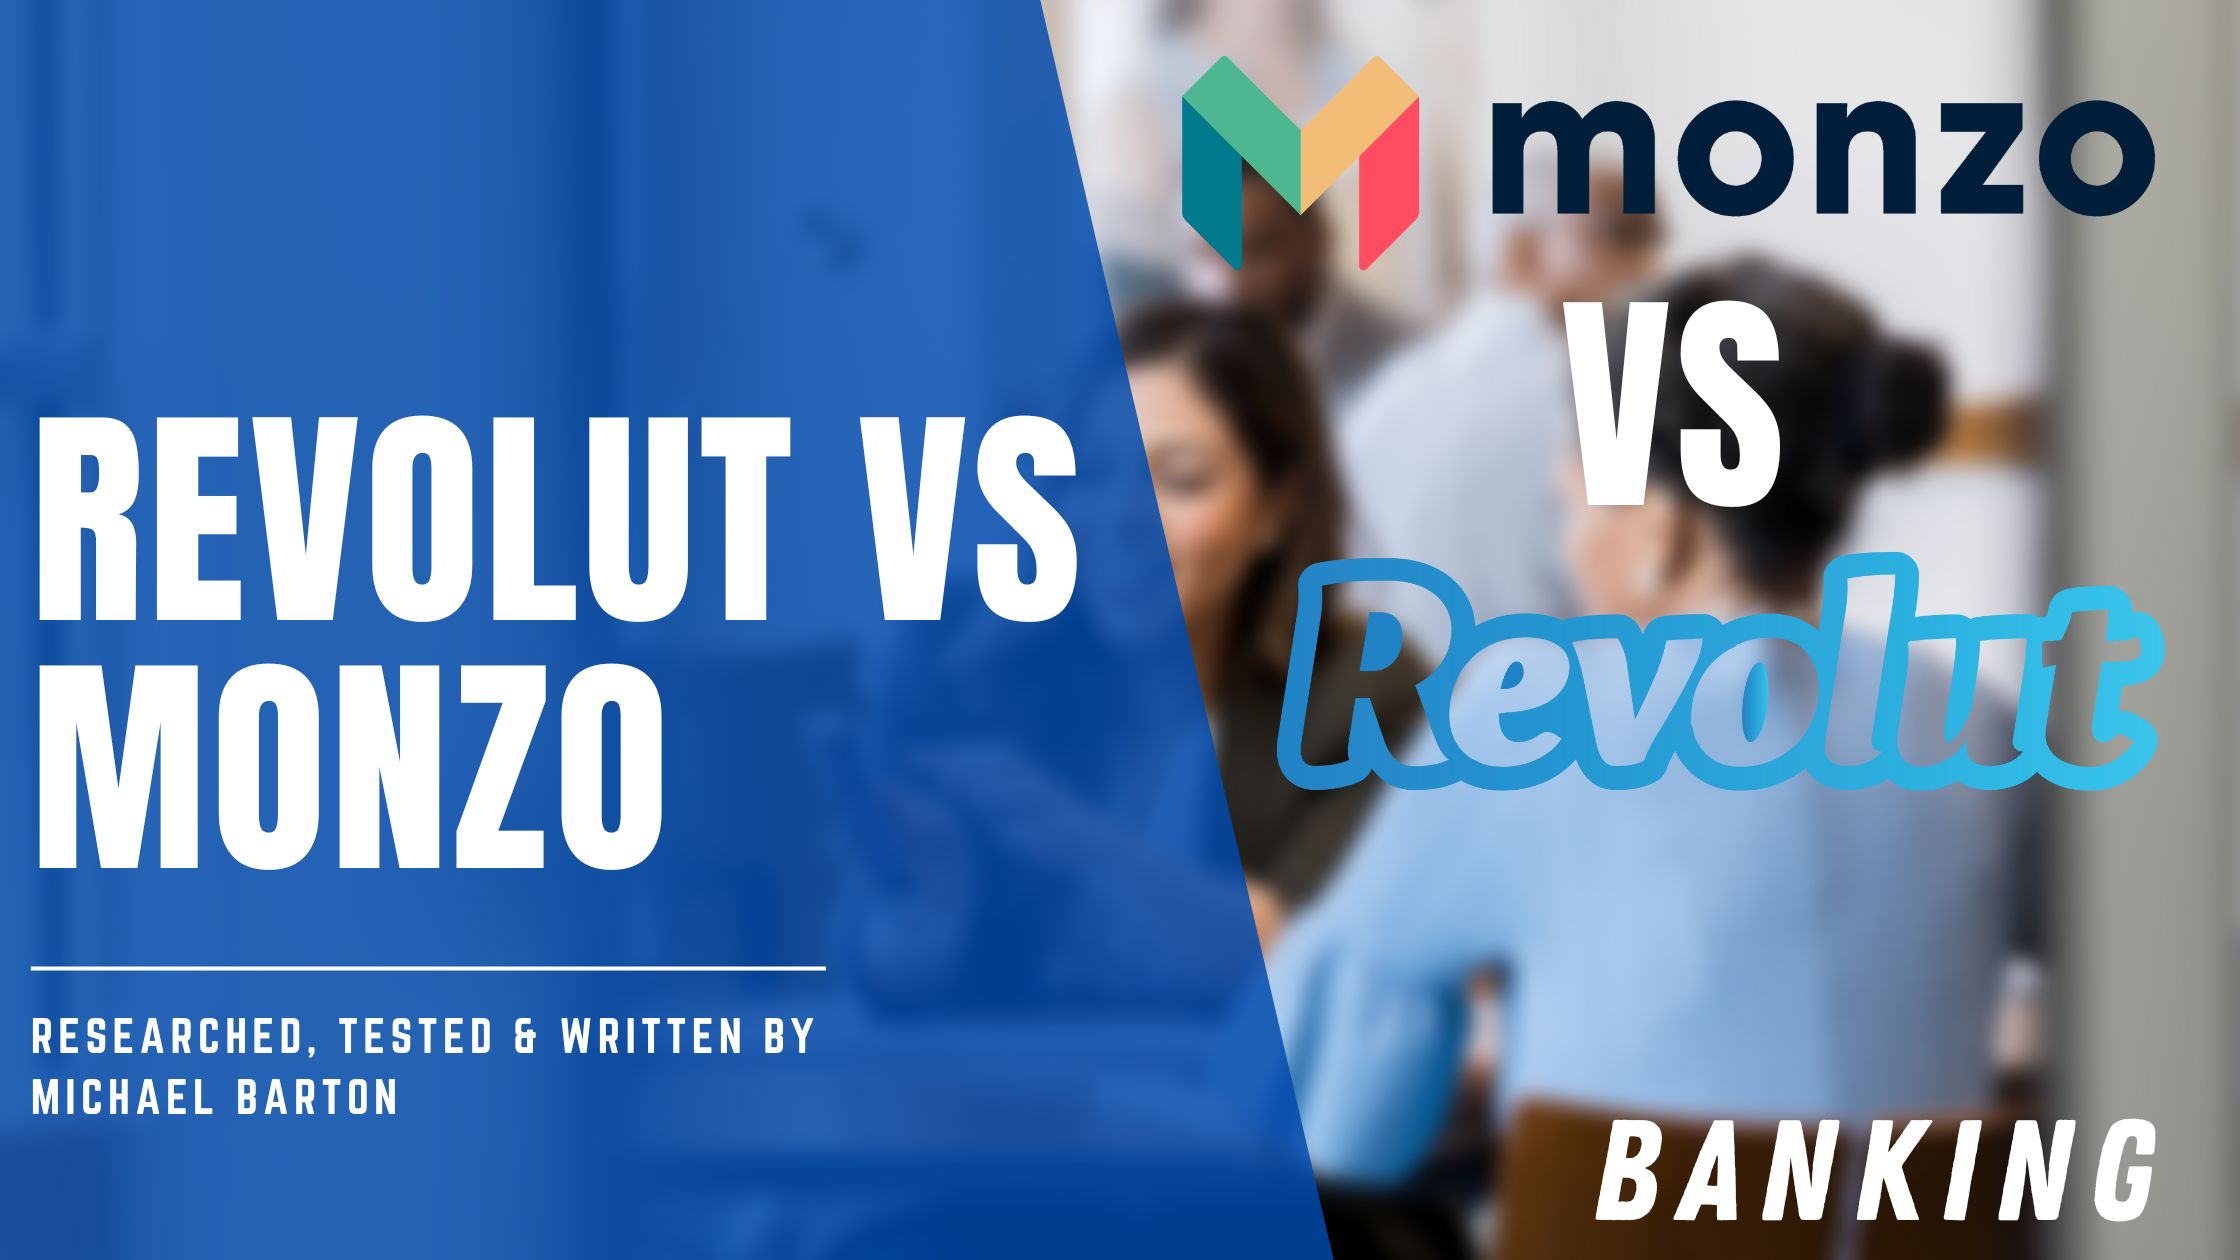 Monzo Vs Revolut feature image